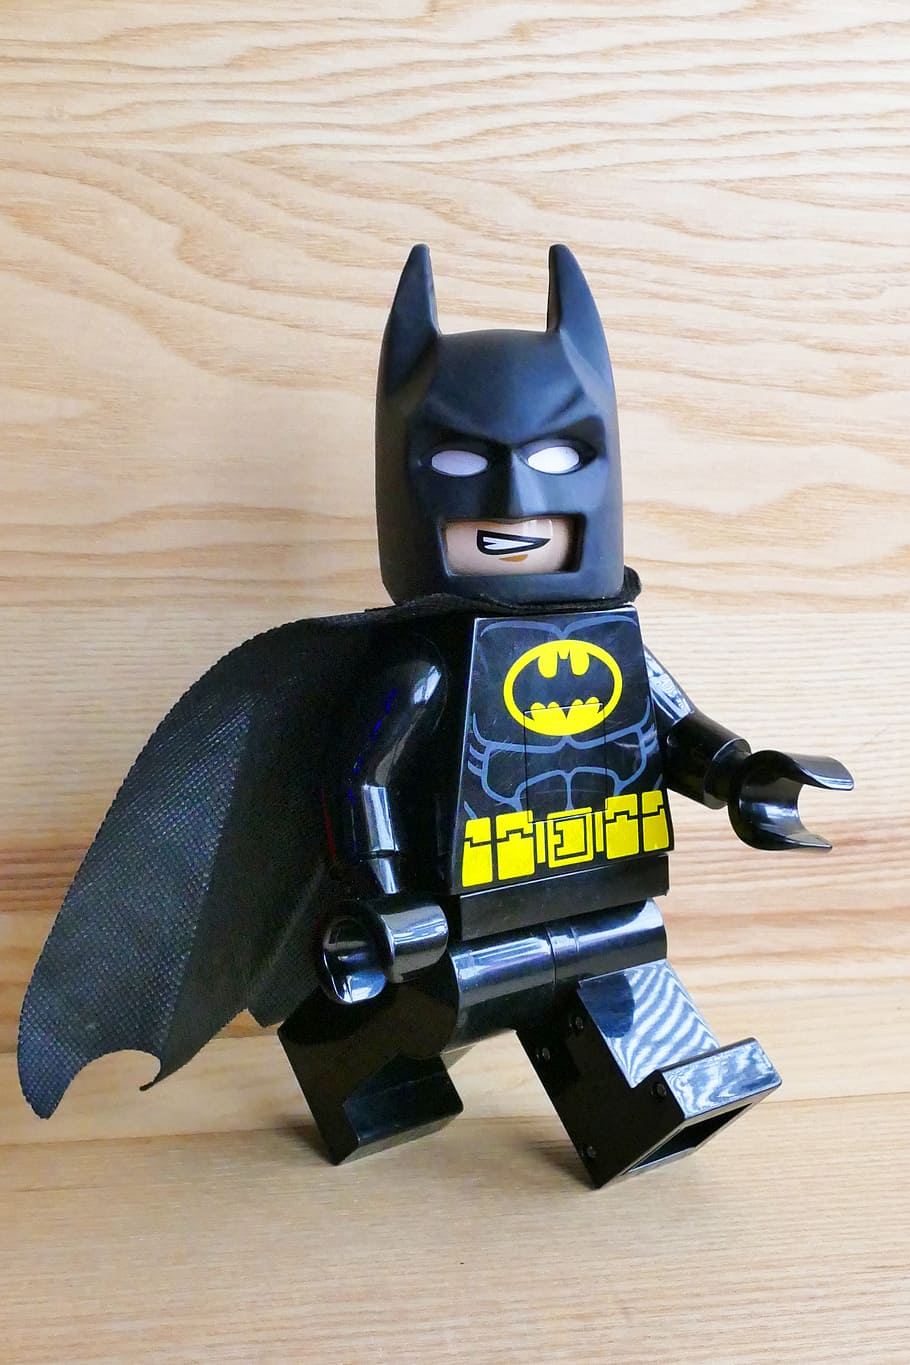 1290x2796px | free download | HD wallpaper: LEGO batman minifig, toys ...